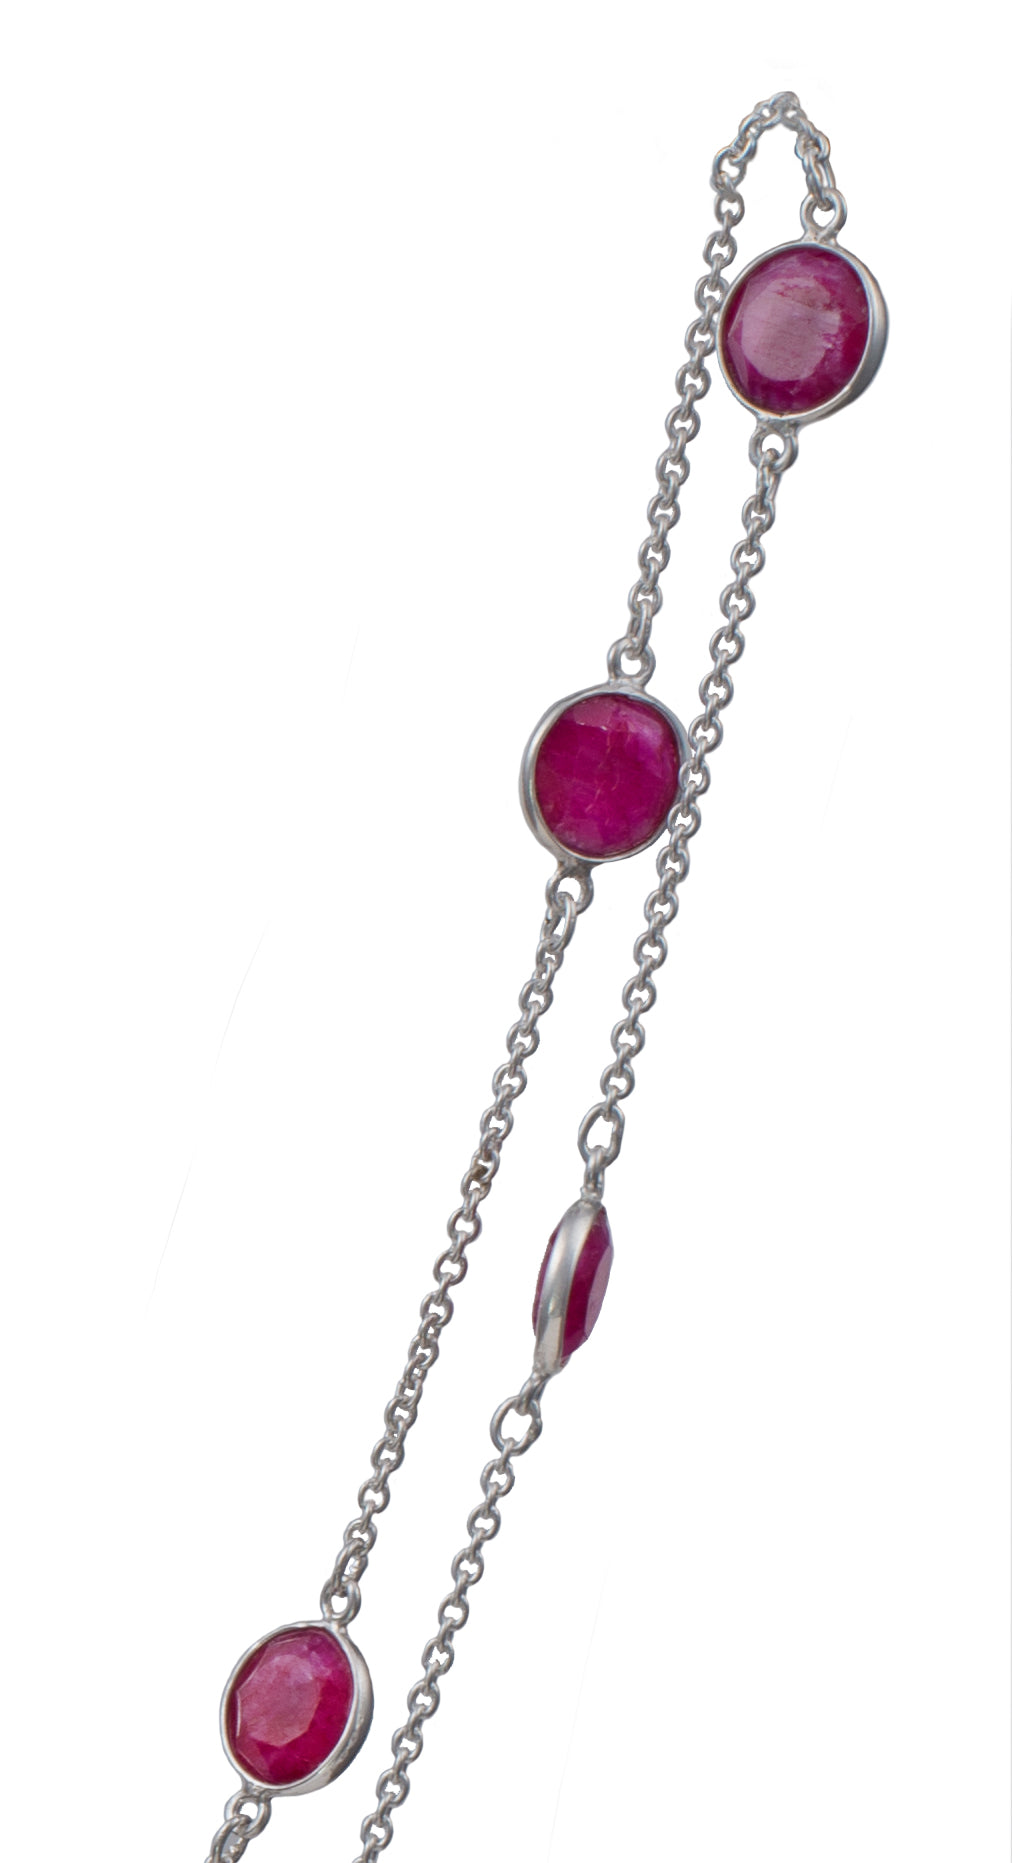 Ruby Quartz Gemstone Necklace in Sterling Silver